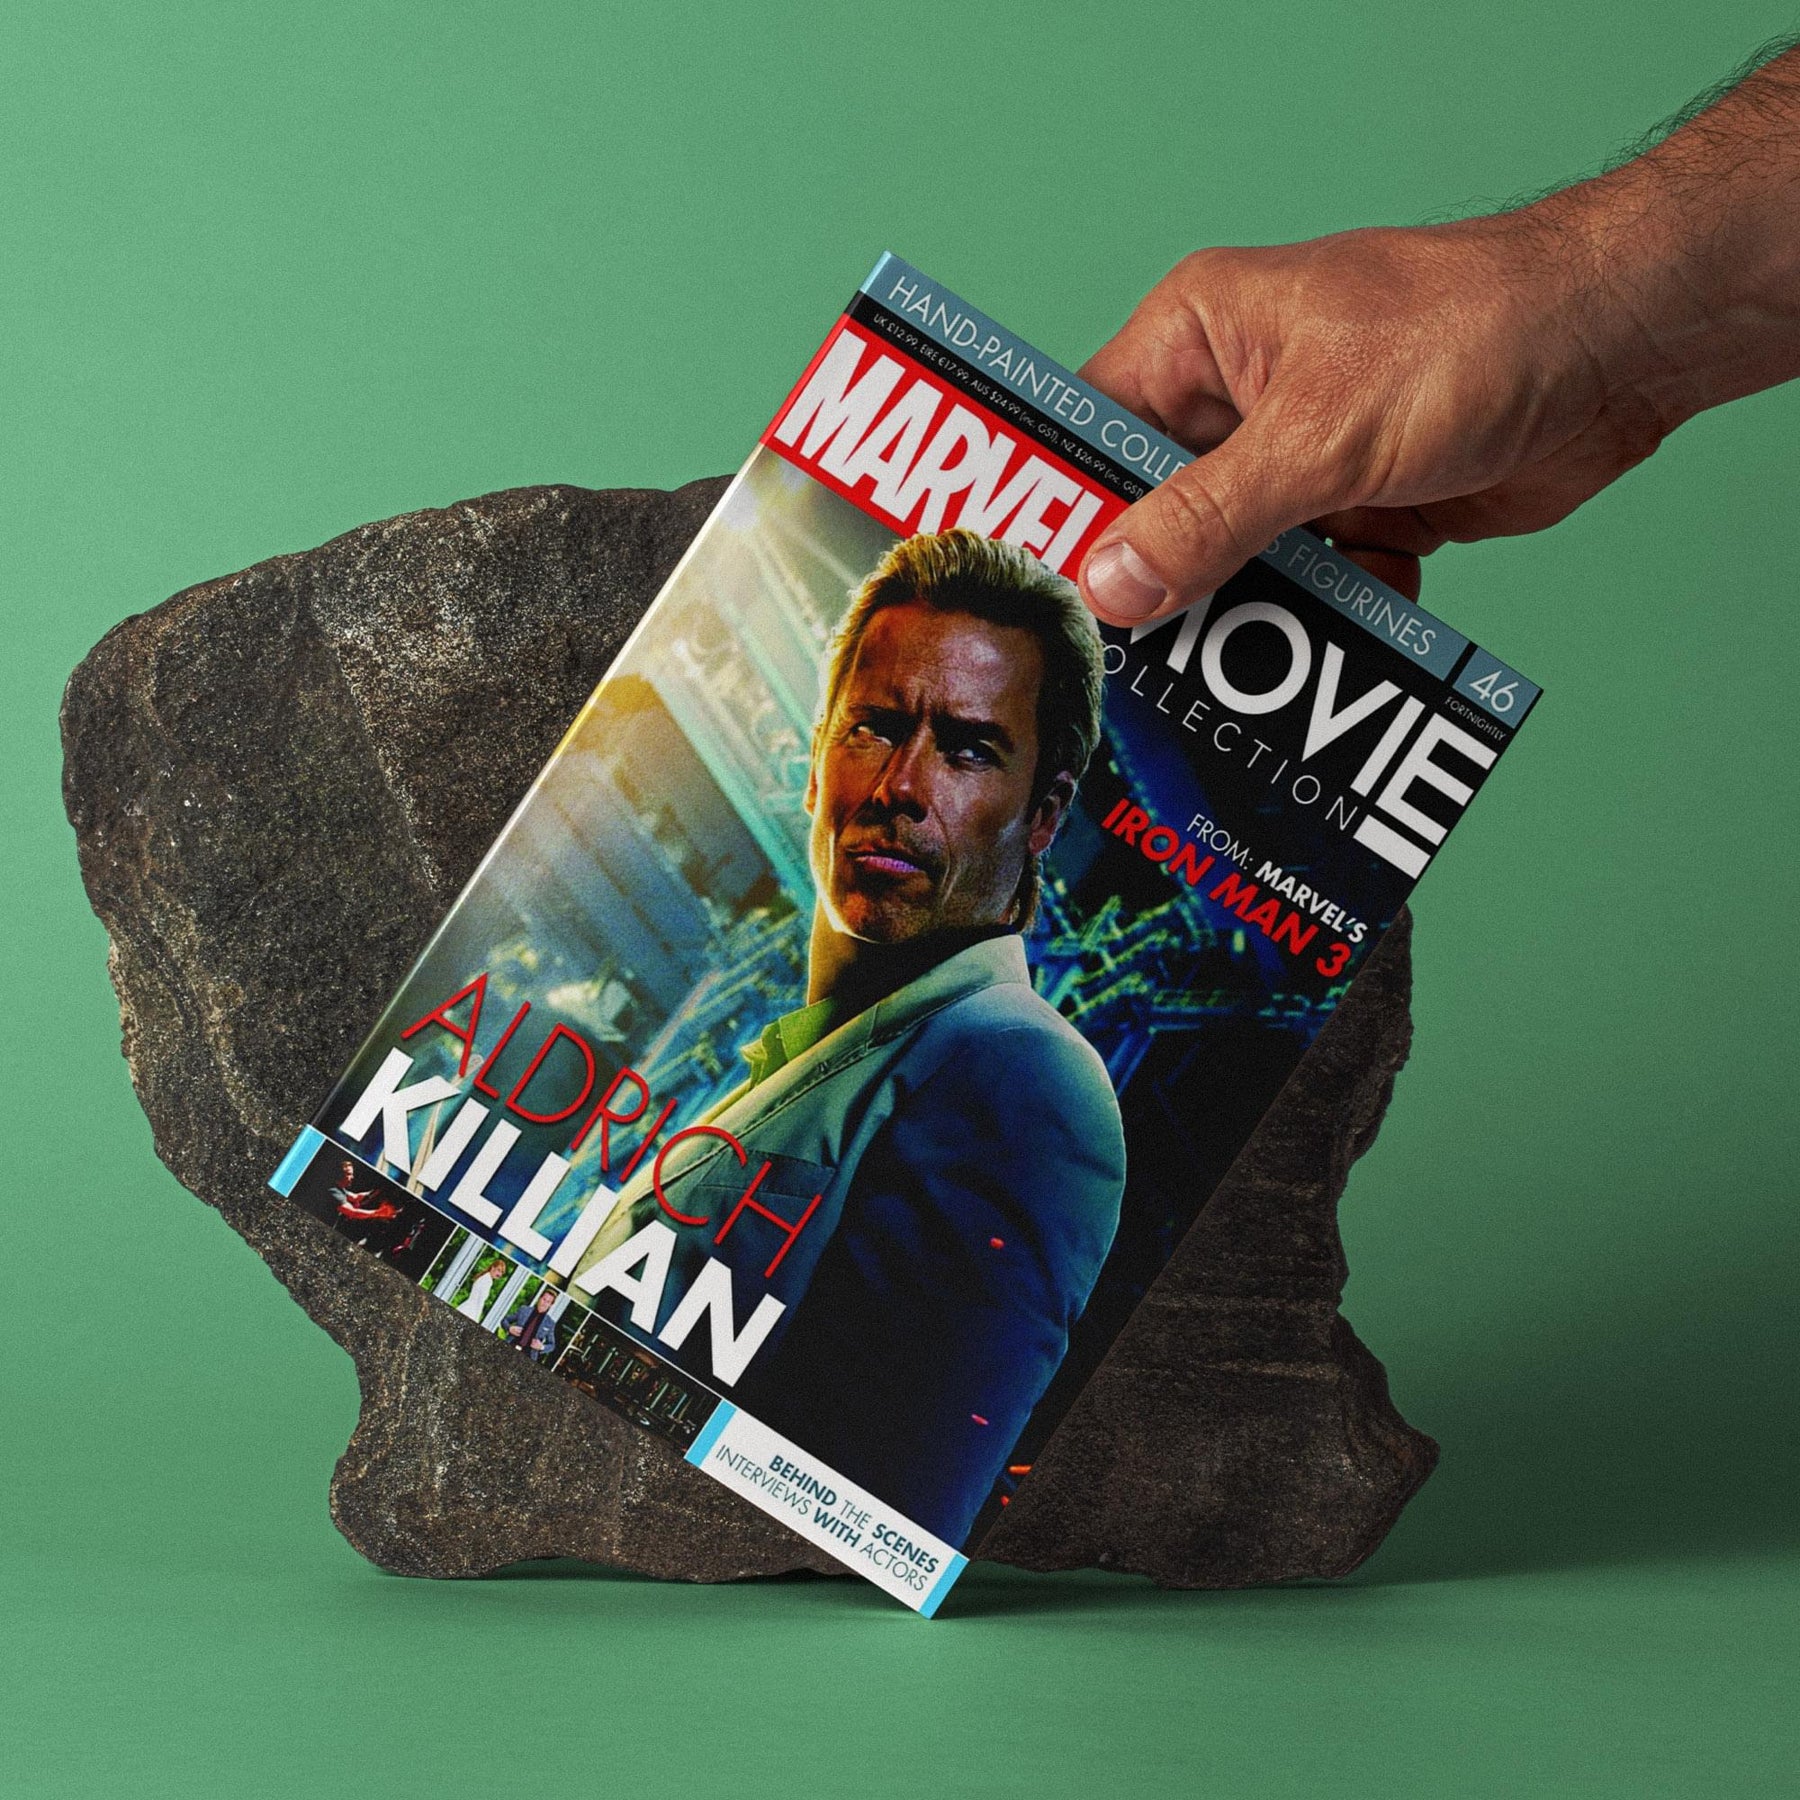 Marvel Movie Collection Magazine Issue #46 Aldrich Killian